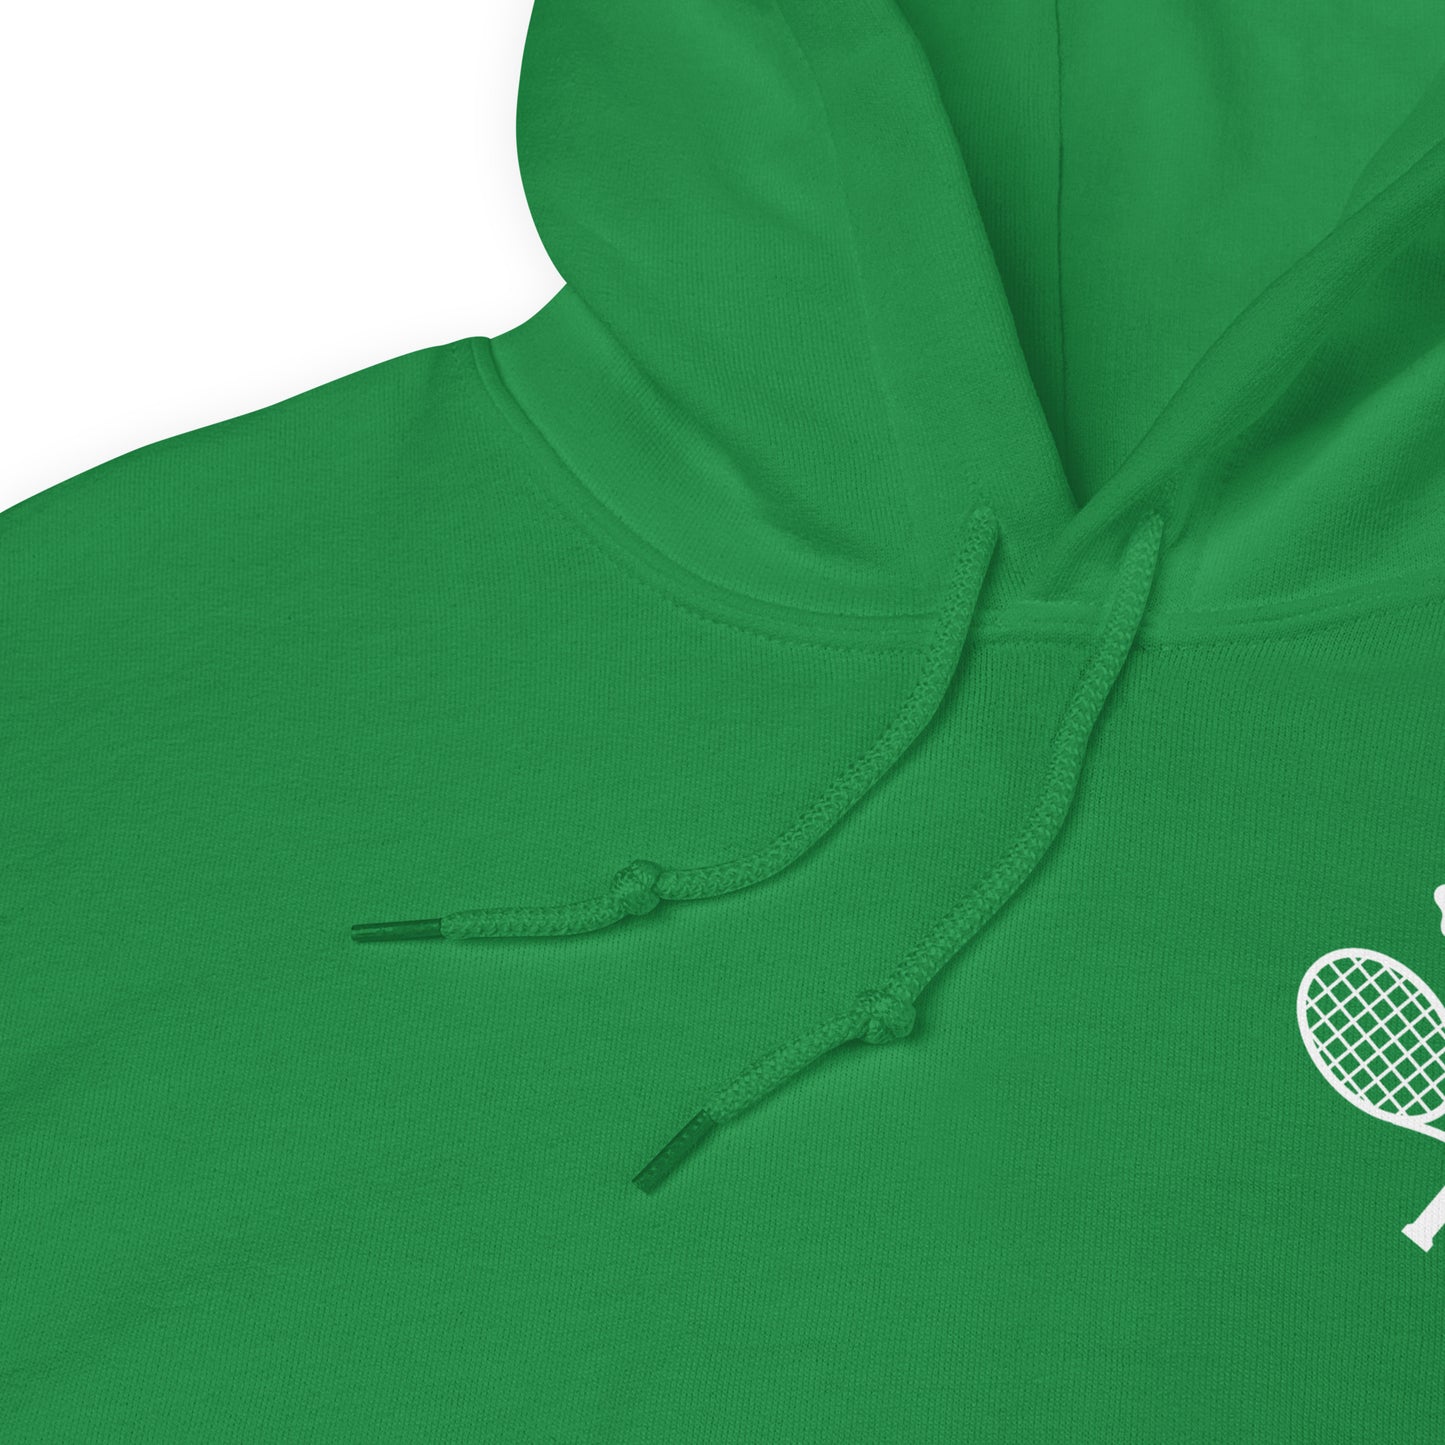 Lucky Tennis Club unisex hoodie